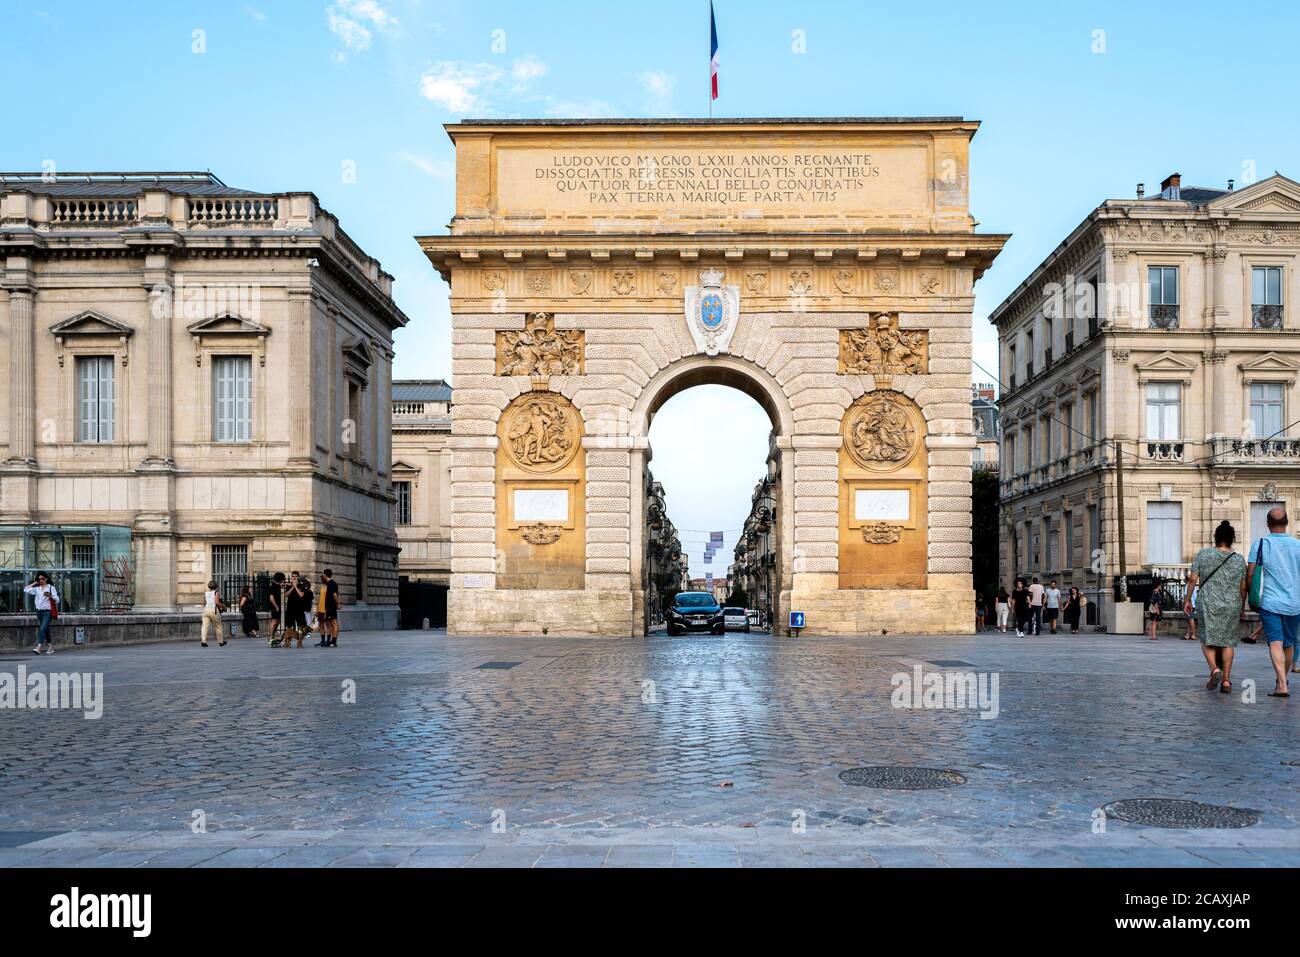 Montpellier, Francia - 26 luglio 2019: Triumphal Arch Porte du Peyrou a Montpellier, Francia durante un tardo pomeriggio estivo. Foto Stock